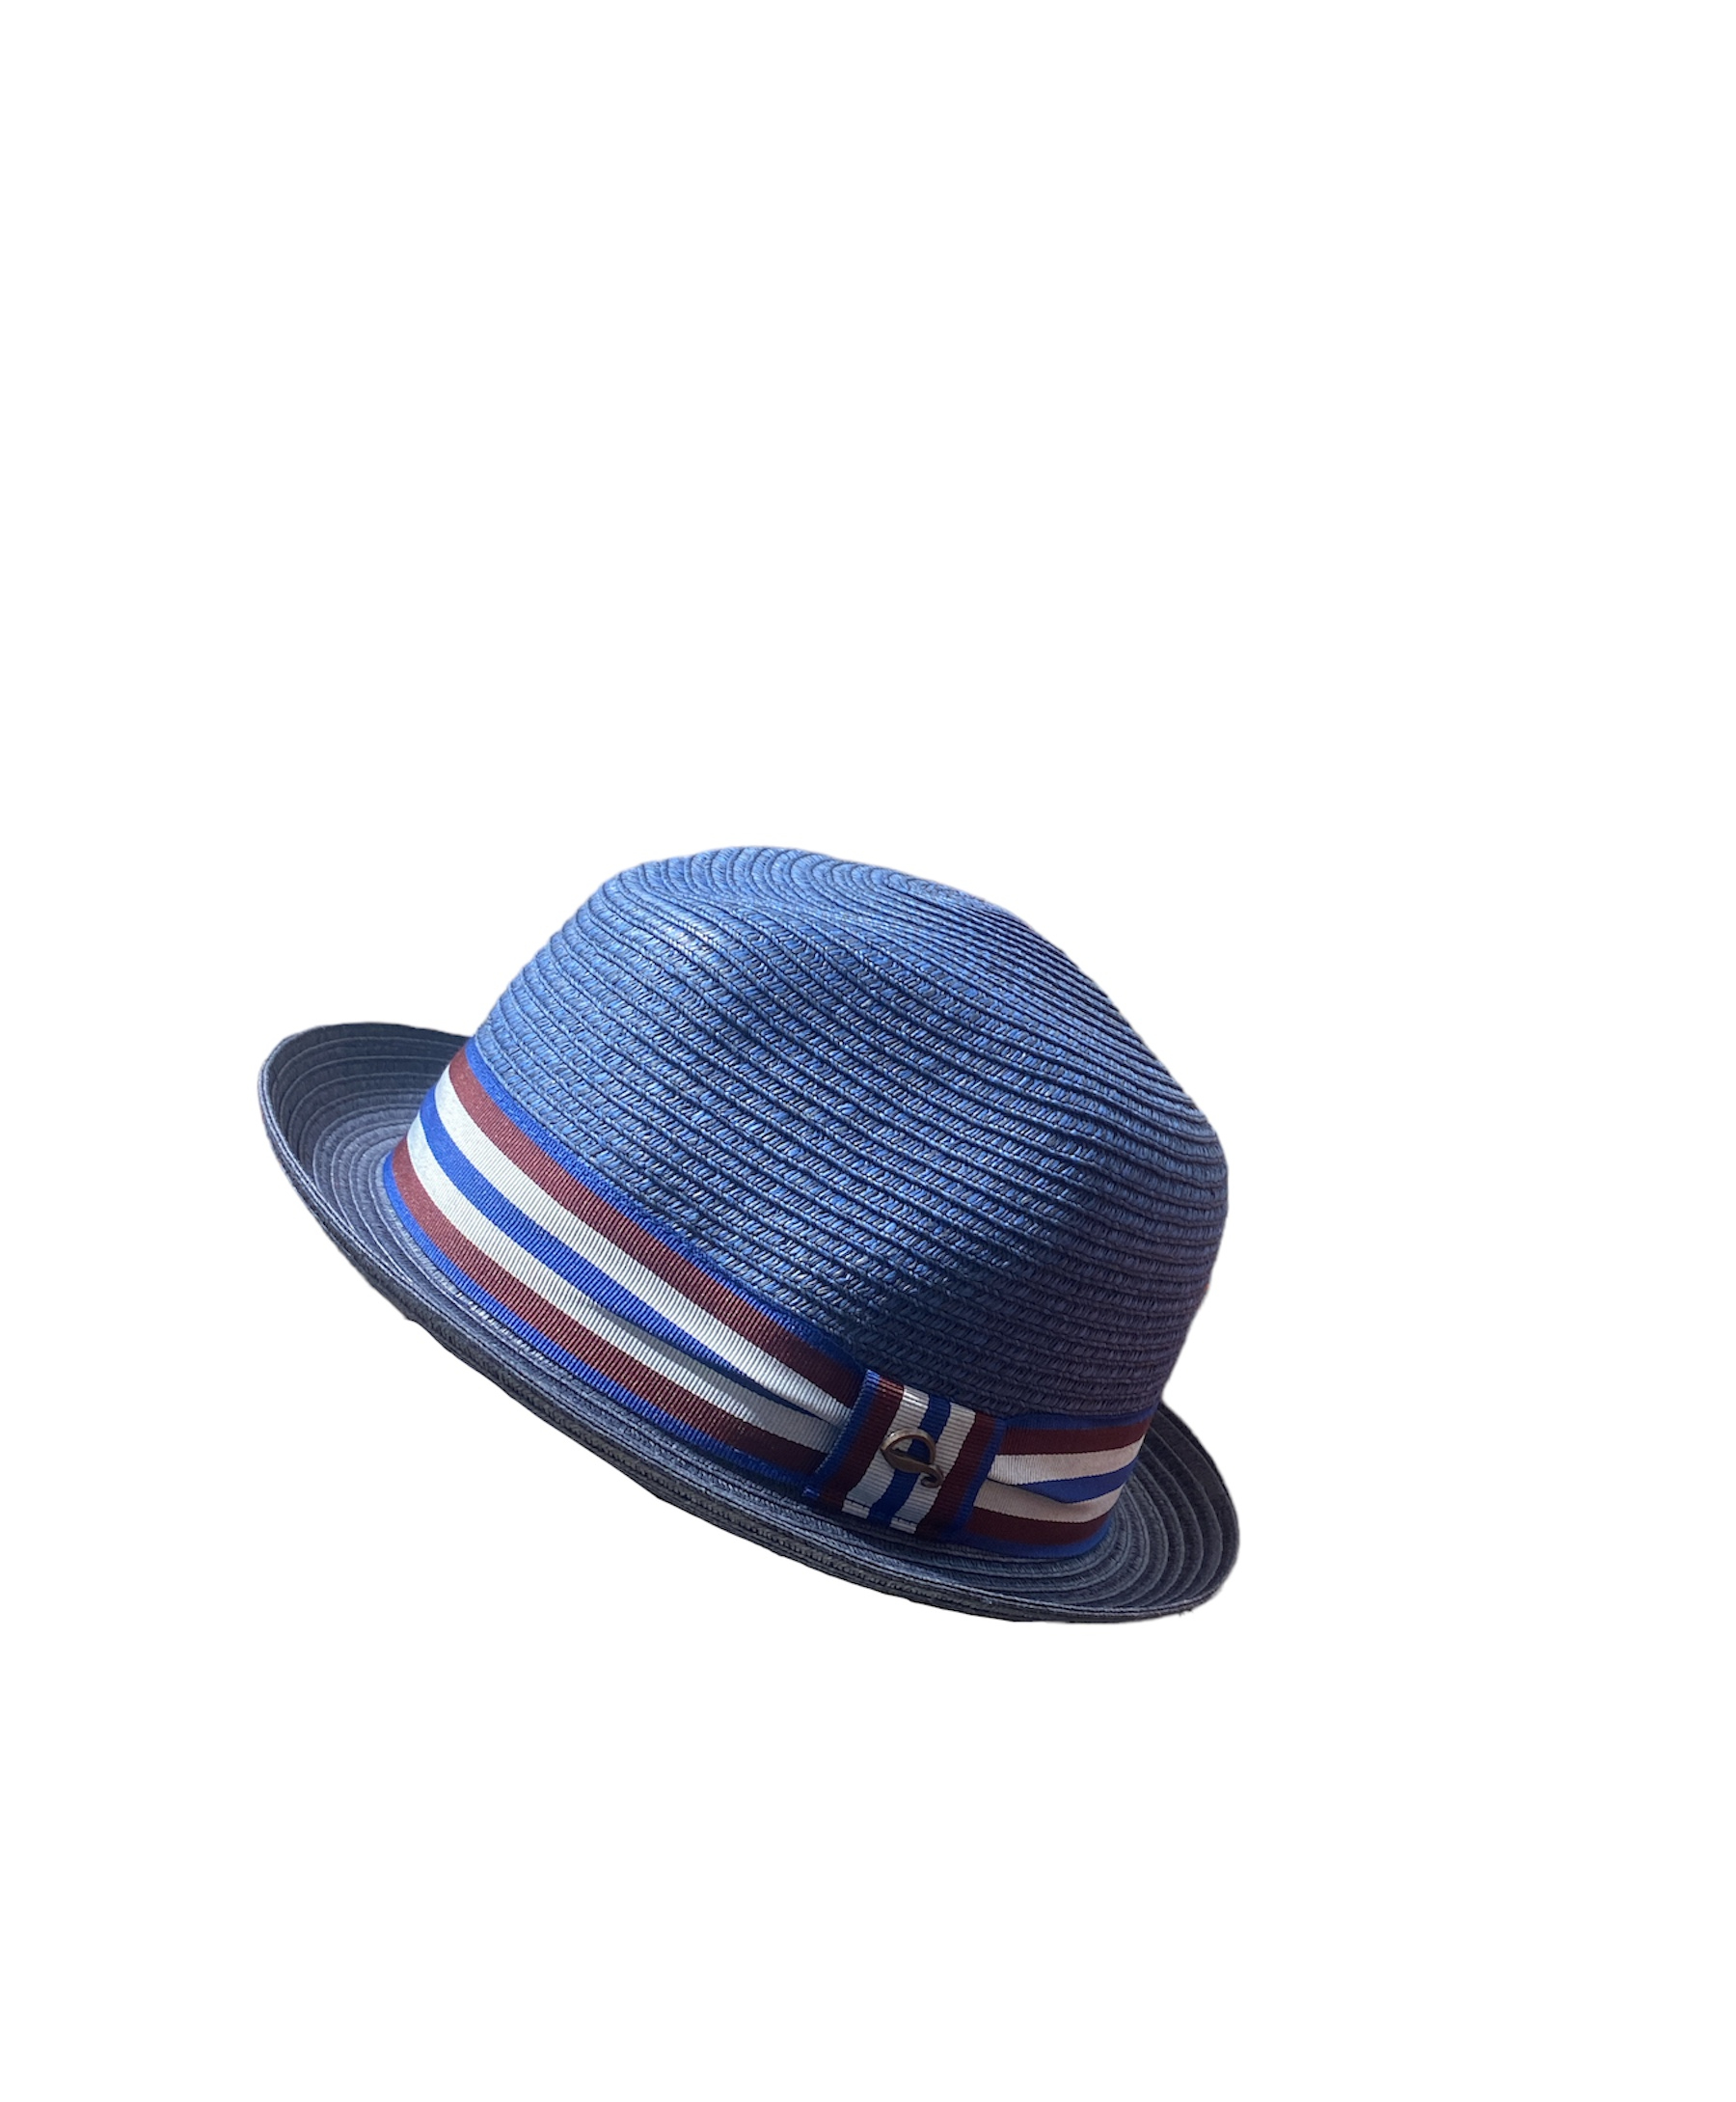 Chapeau brooklyn Göttmann bleu avec ganse bleu blanc rouge